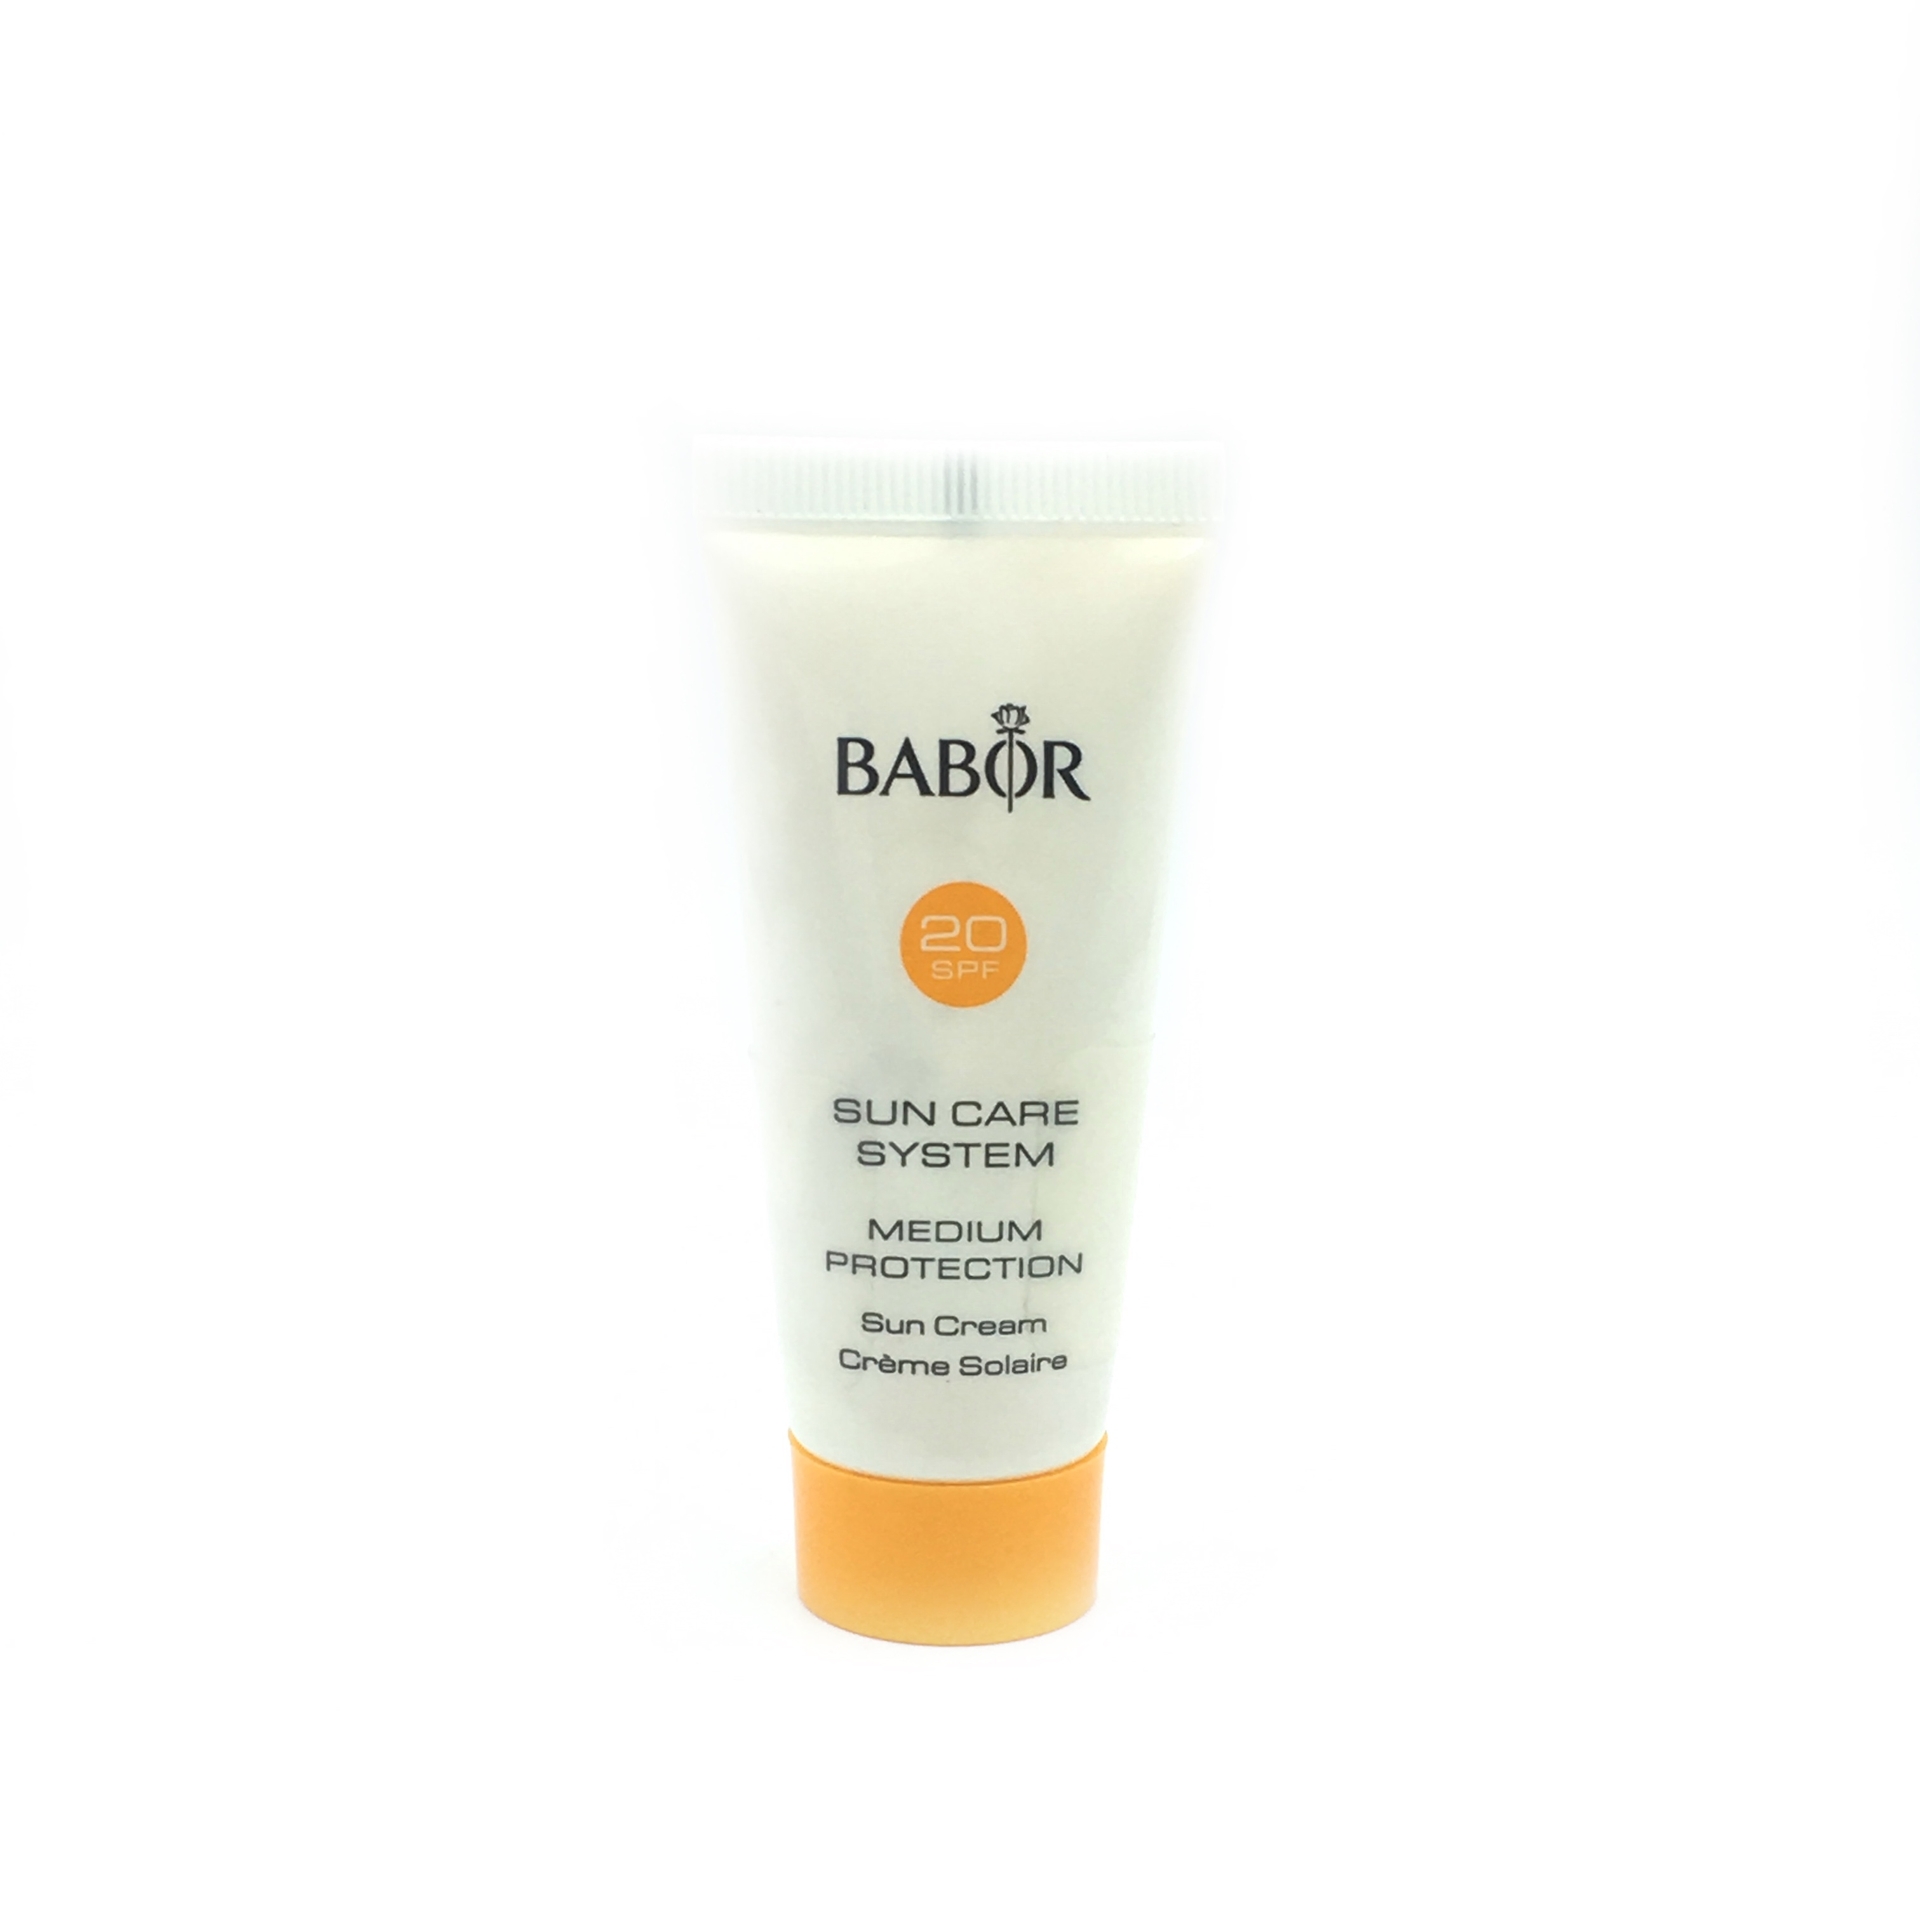 Babor 20 sff Sun Care System Medium Protection Sun Cream Skin Care